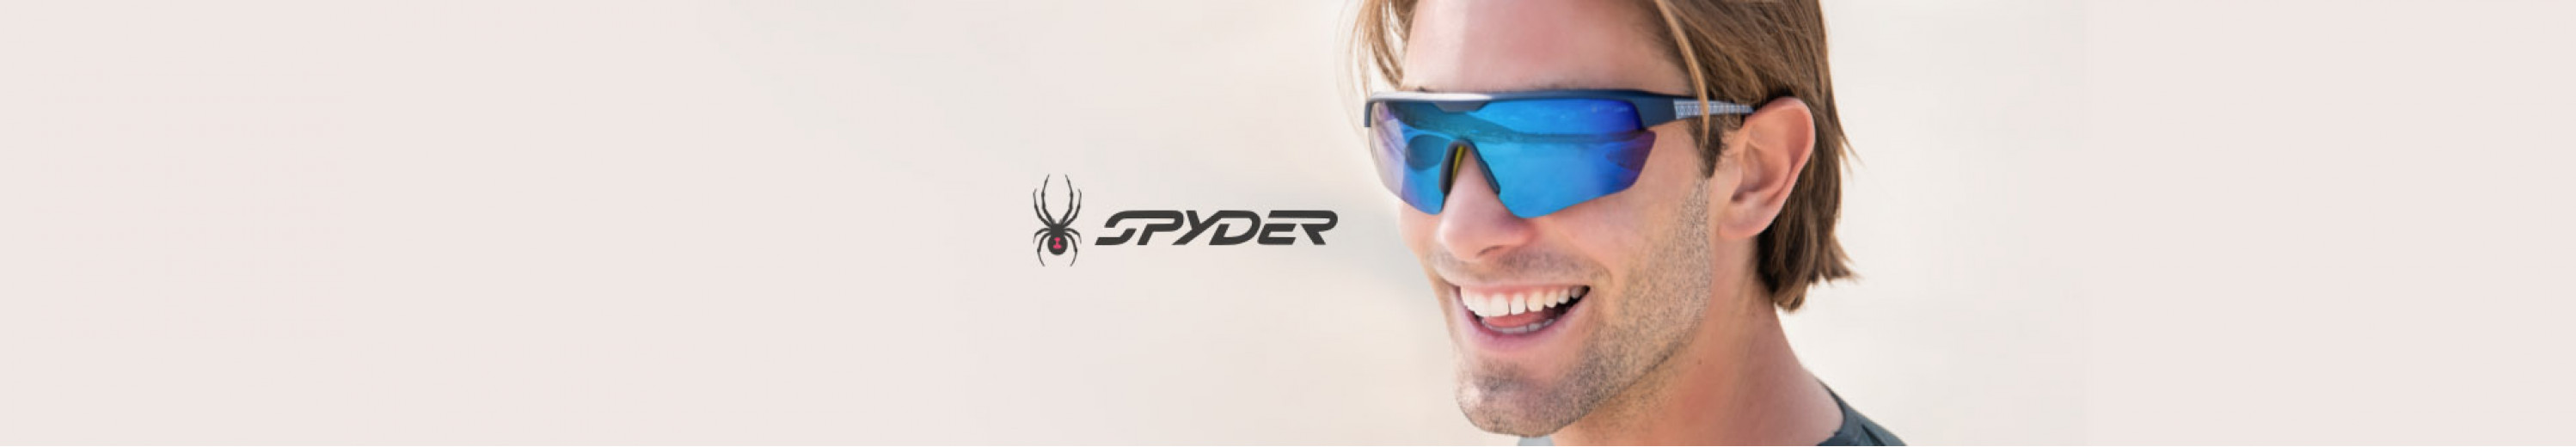 Spyder Sunglasses